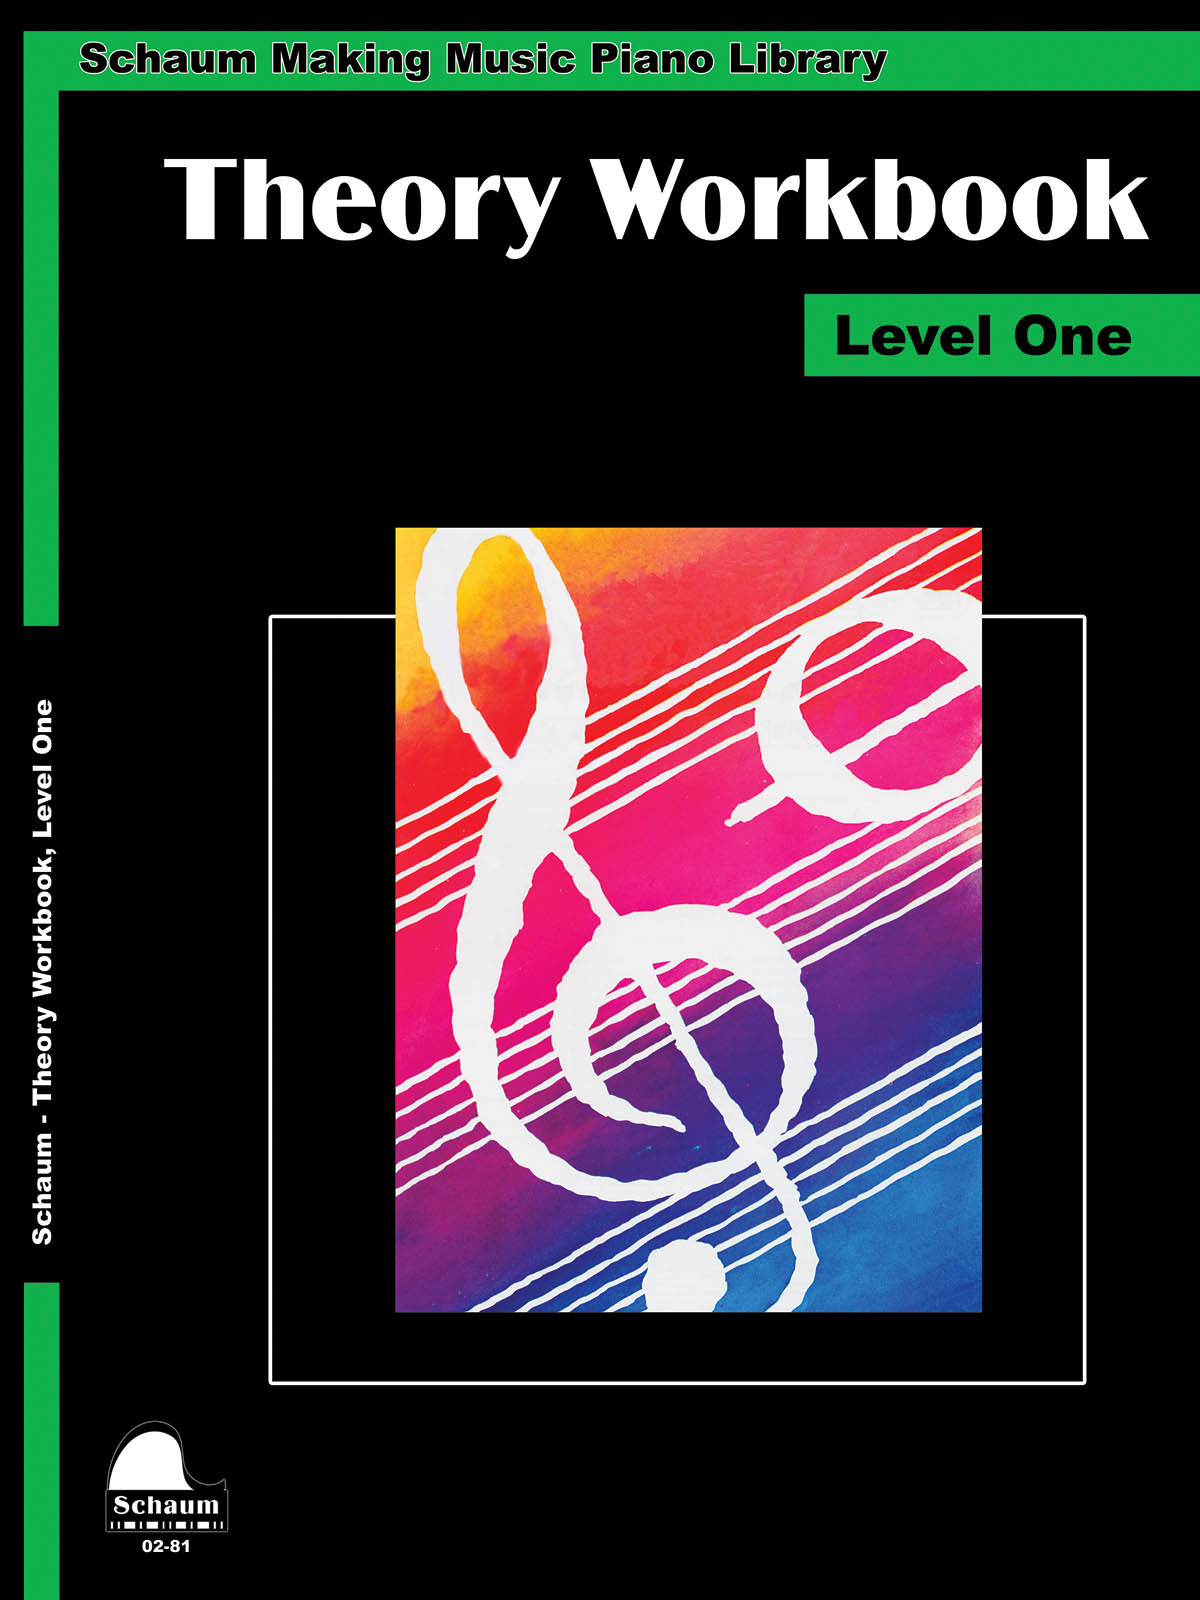 Theory Workbook - Level 1 - Schaum Making Music Piano Library